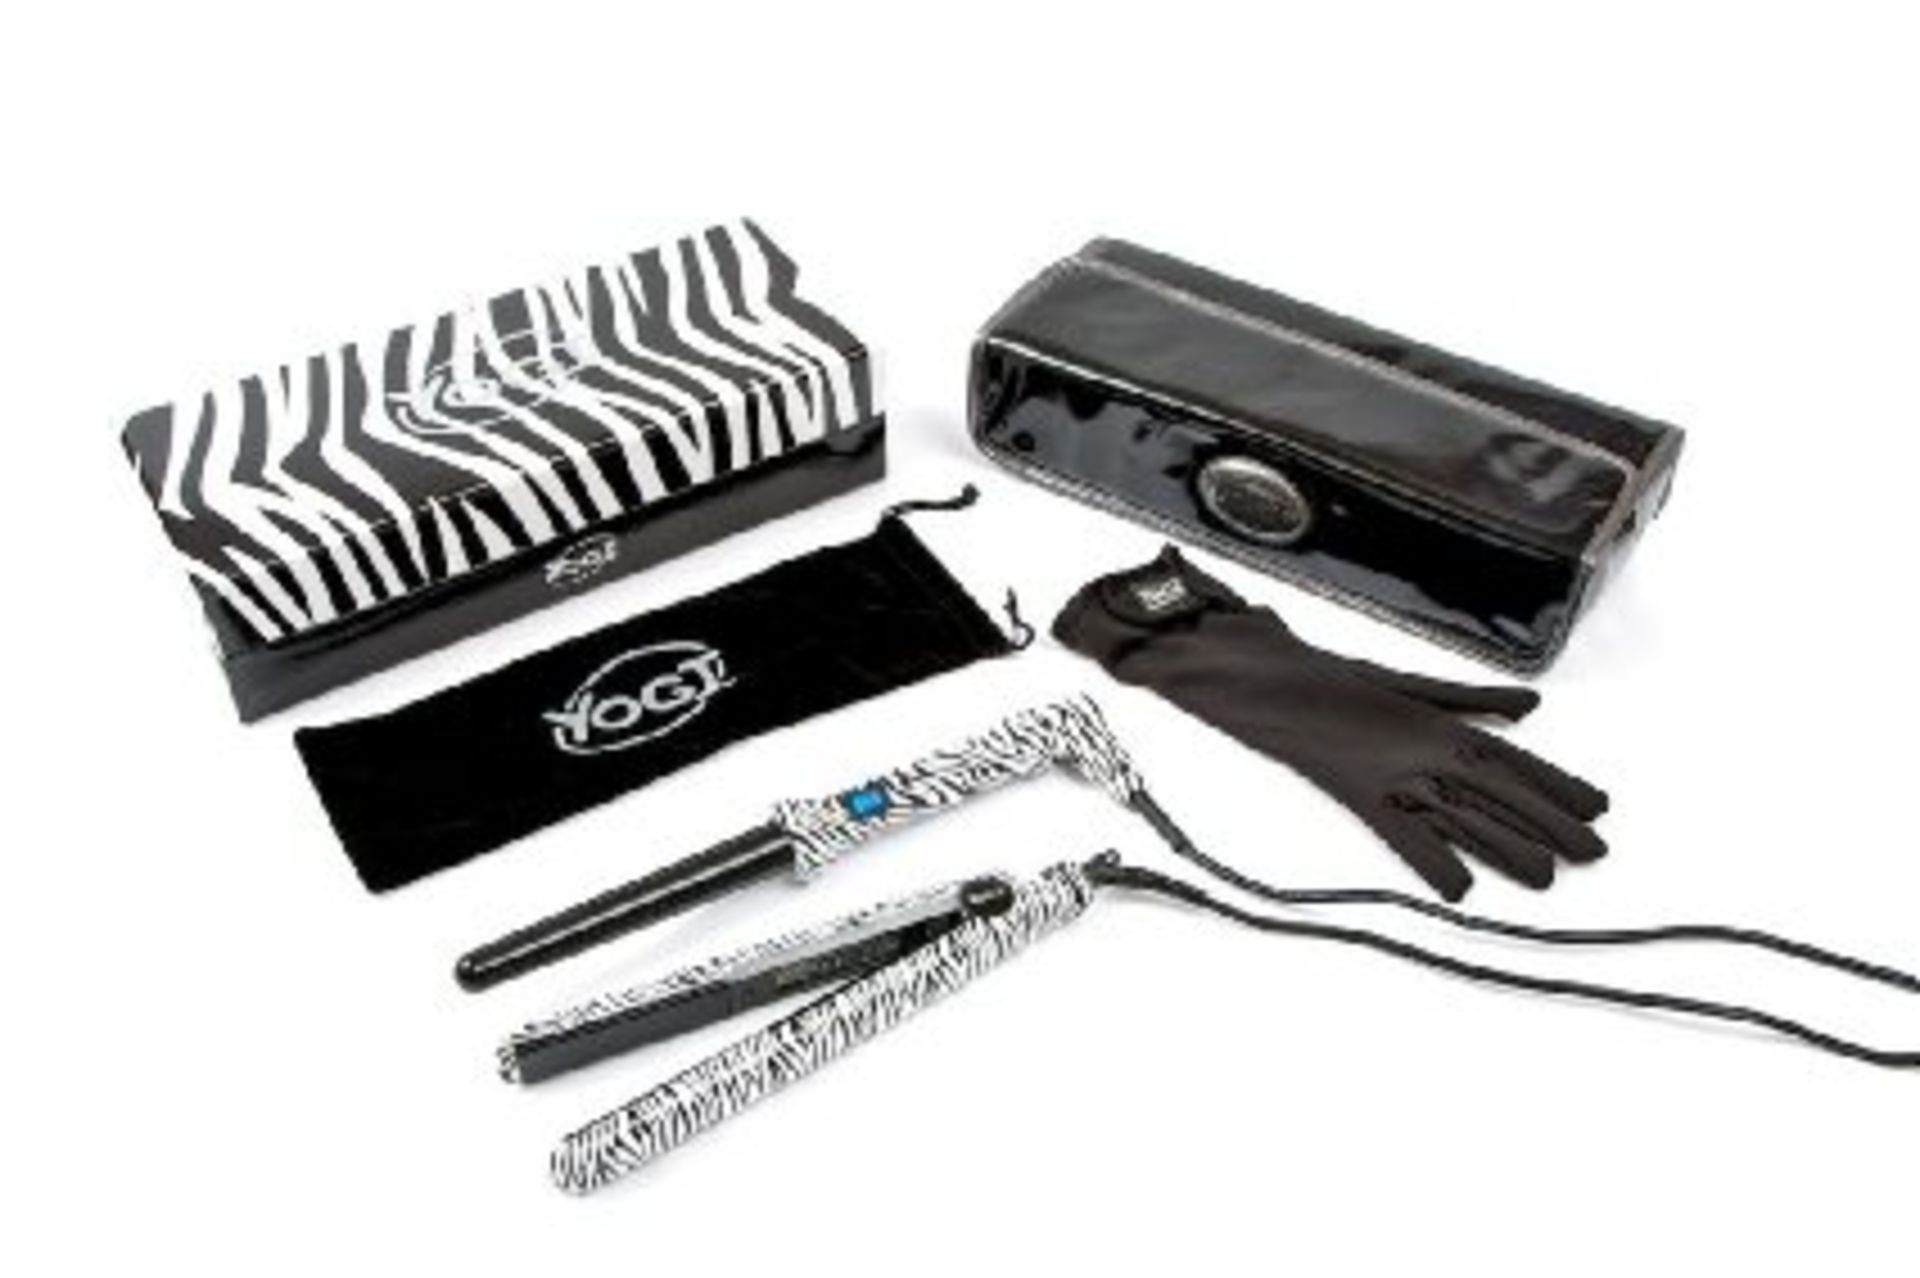 V Brand New Yogi Gift Set Twin Pack Straightener And Wand In Zebra Pattern RRP £129.99 - Image 2 of 4